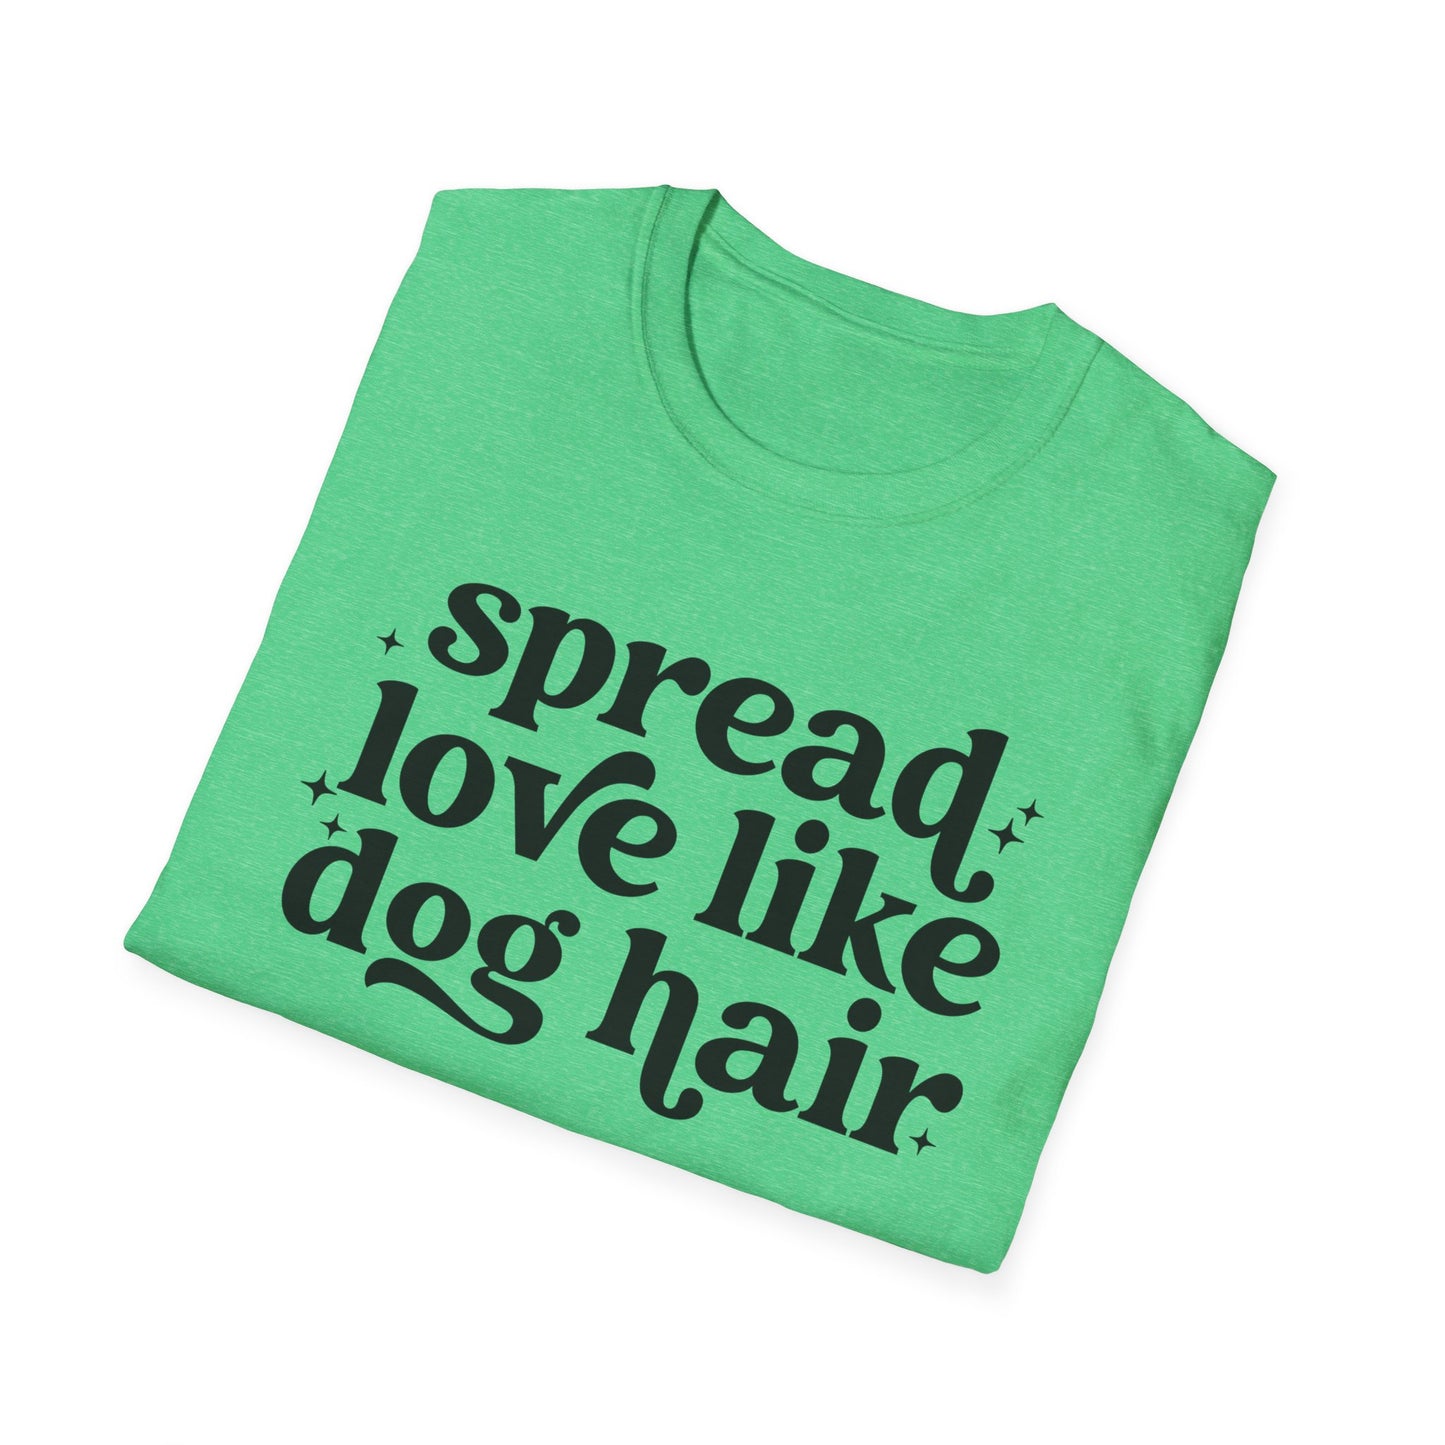 Spread Love like Dog Hair - Unisex Softstyle T-Shirt